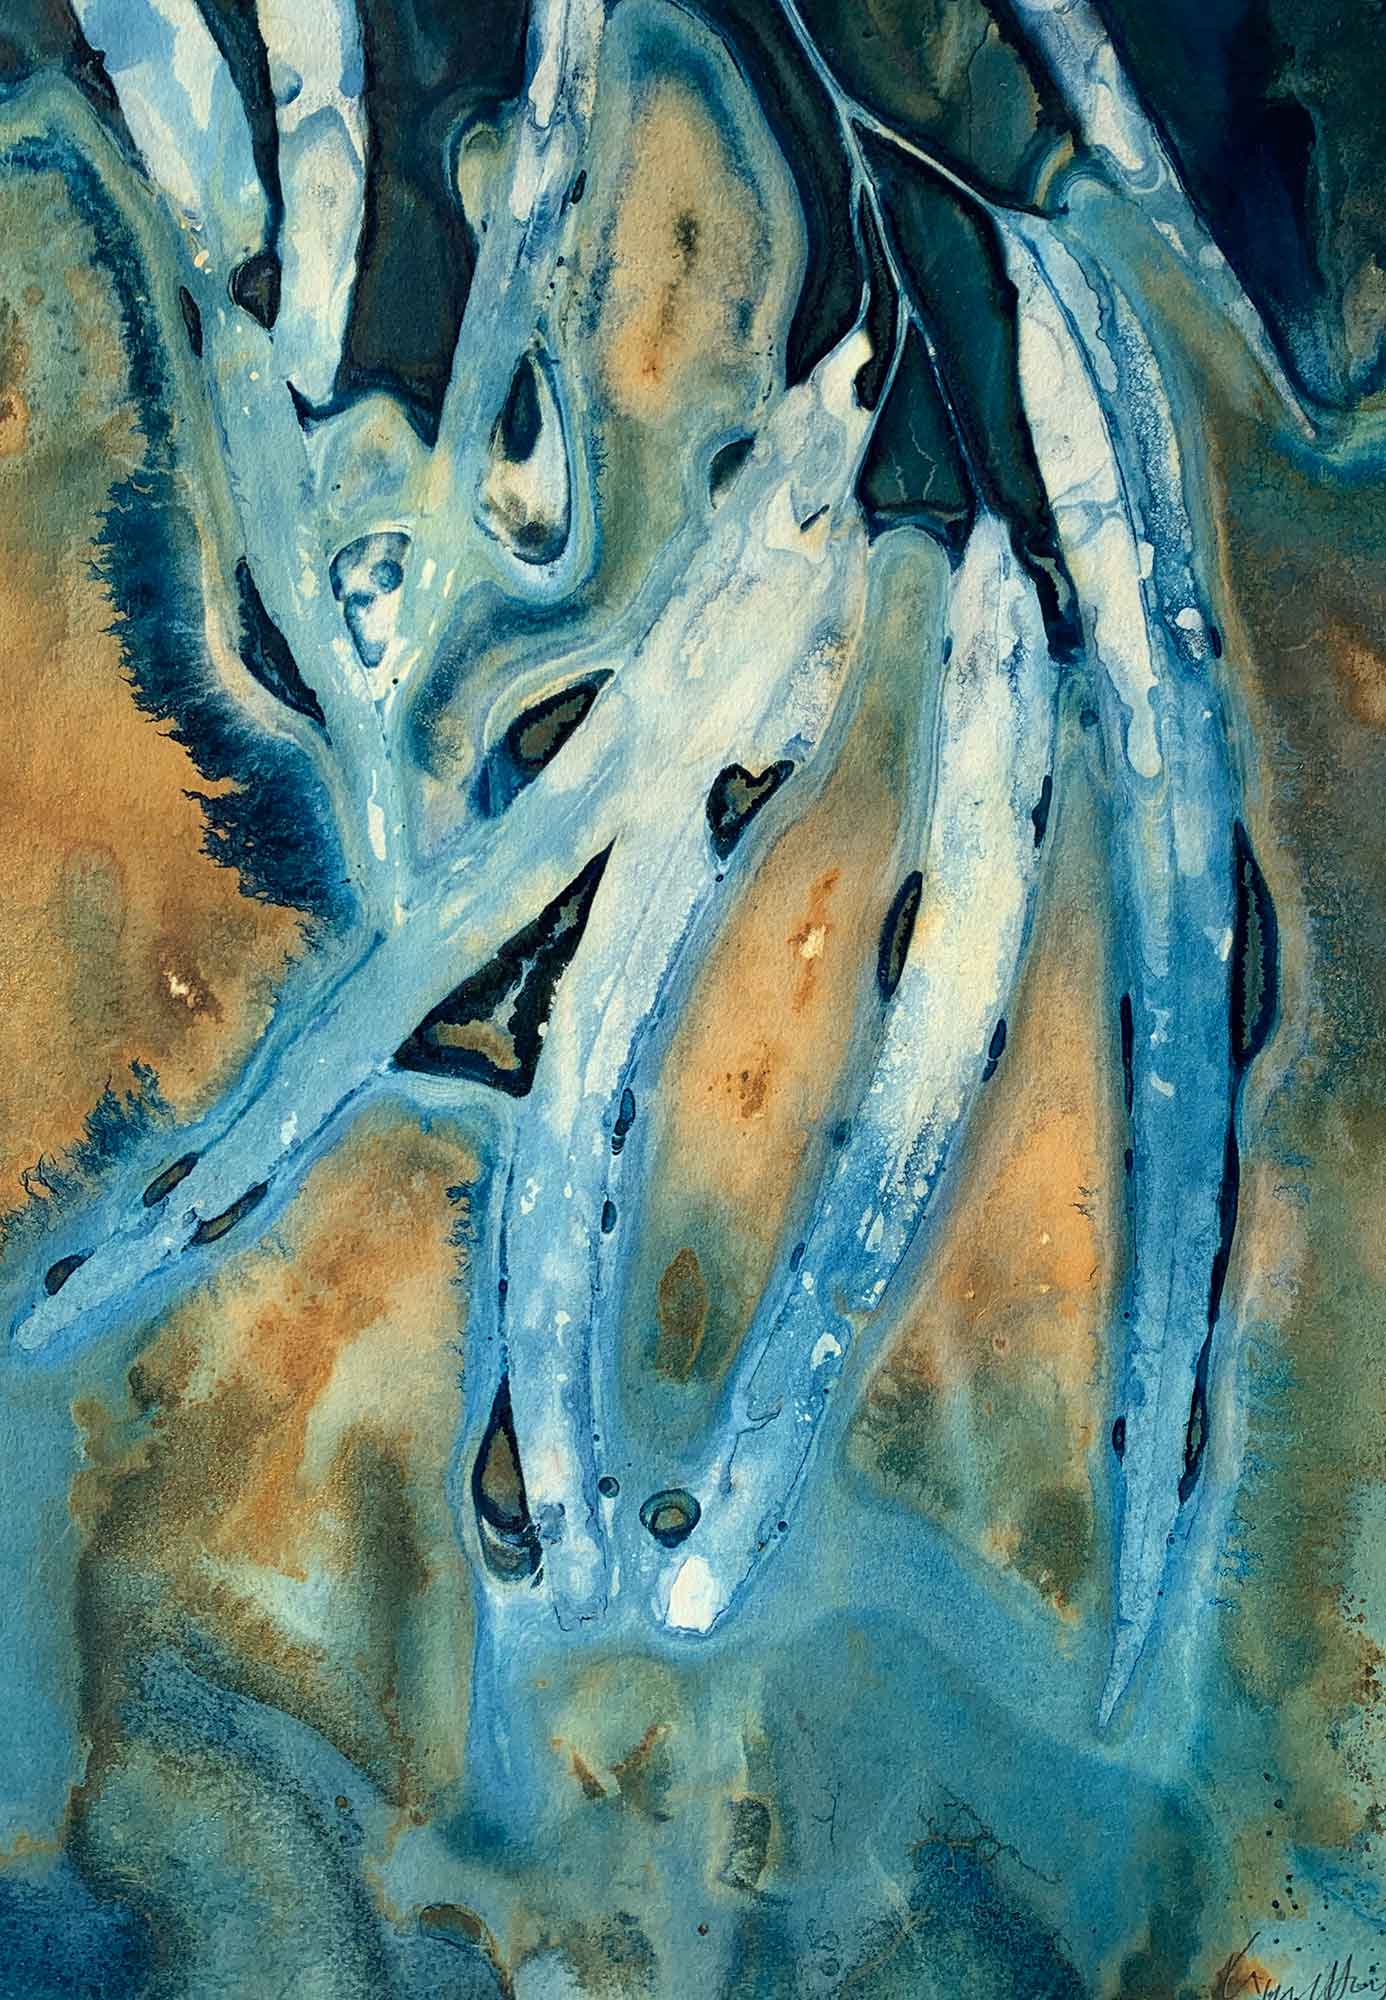 Of droughts and flooding rains I - Kim Herringe, wet cyanotype